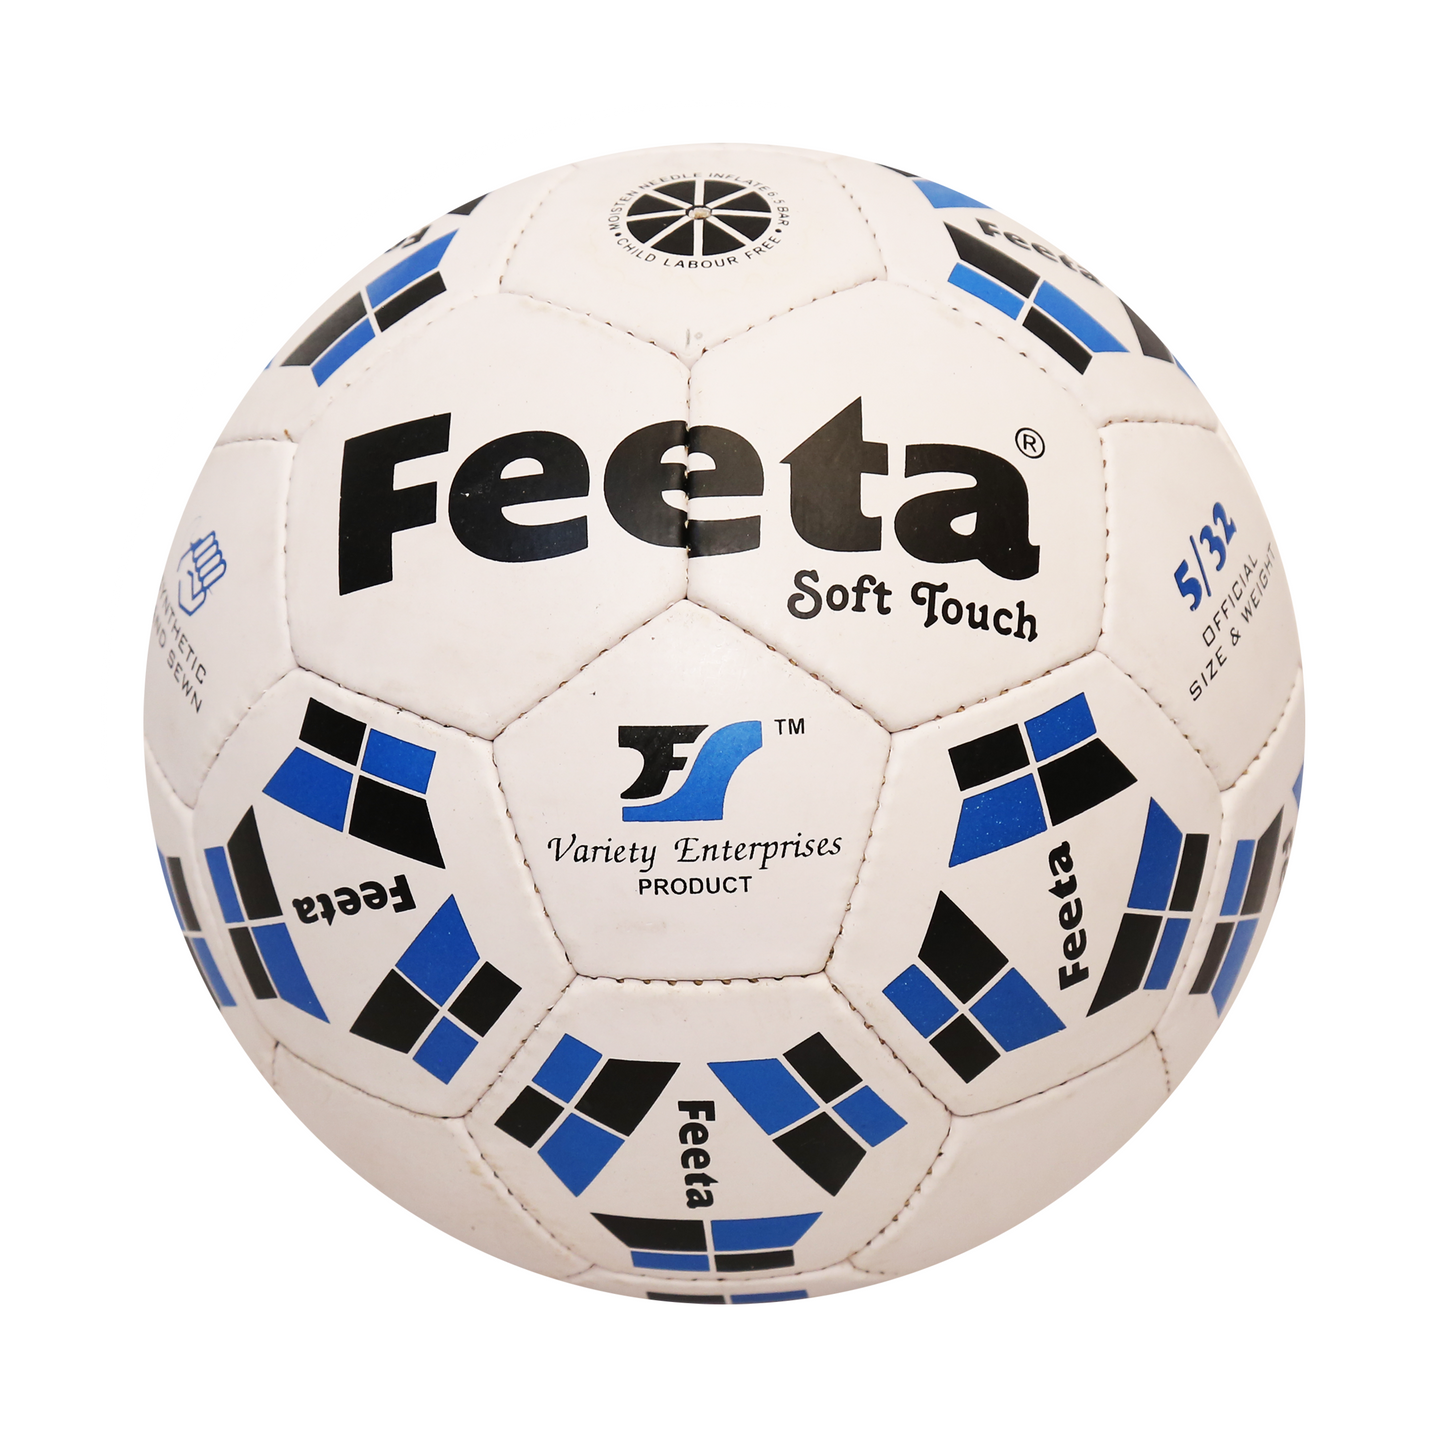 Fenta Sports Soft Touch Football (White+Blue+Black)